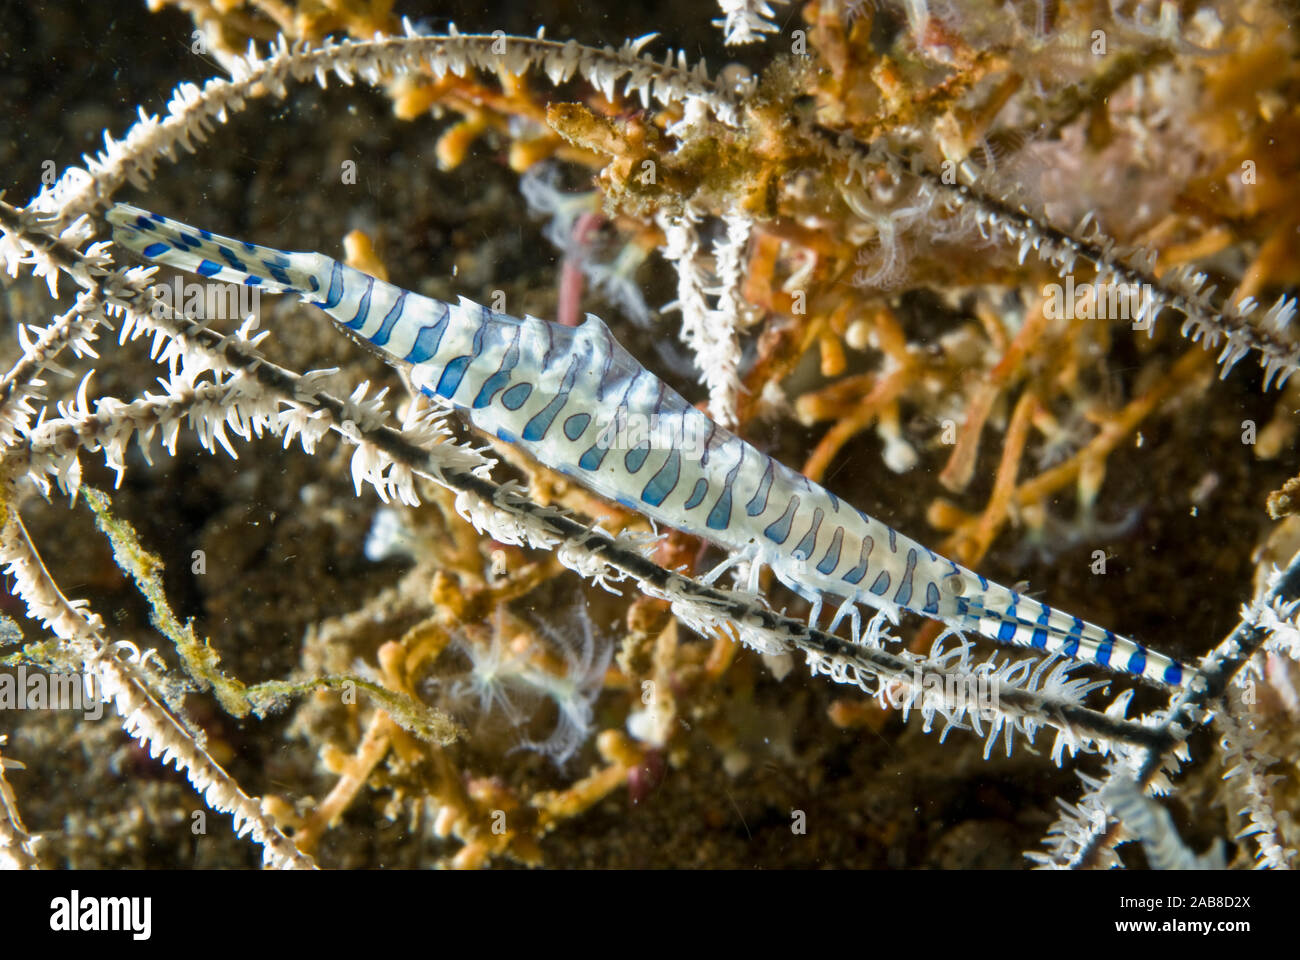 Sawblade shrimp (Tozeuma armatum), an exotic very elongate species of shrimp whose rostrum is nearly a third of the total length. Body transparent wit Stock Photo